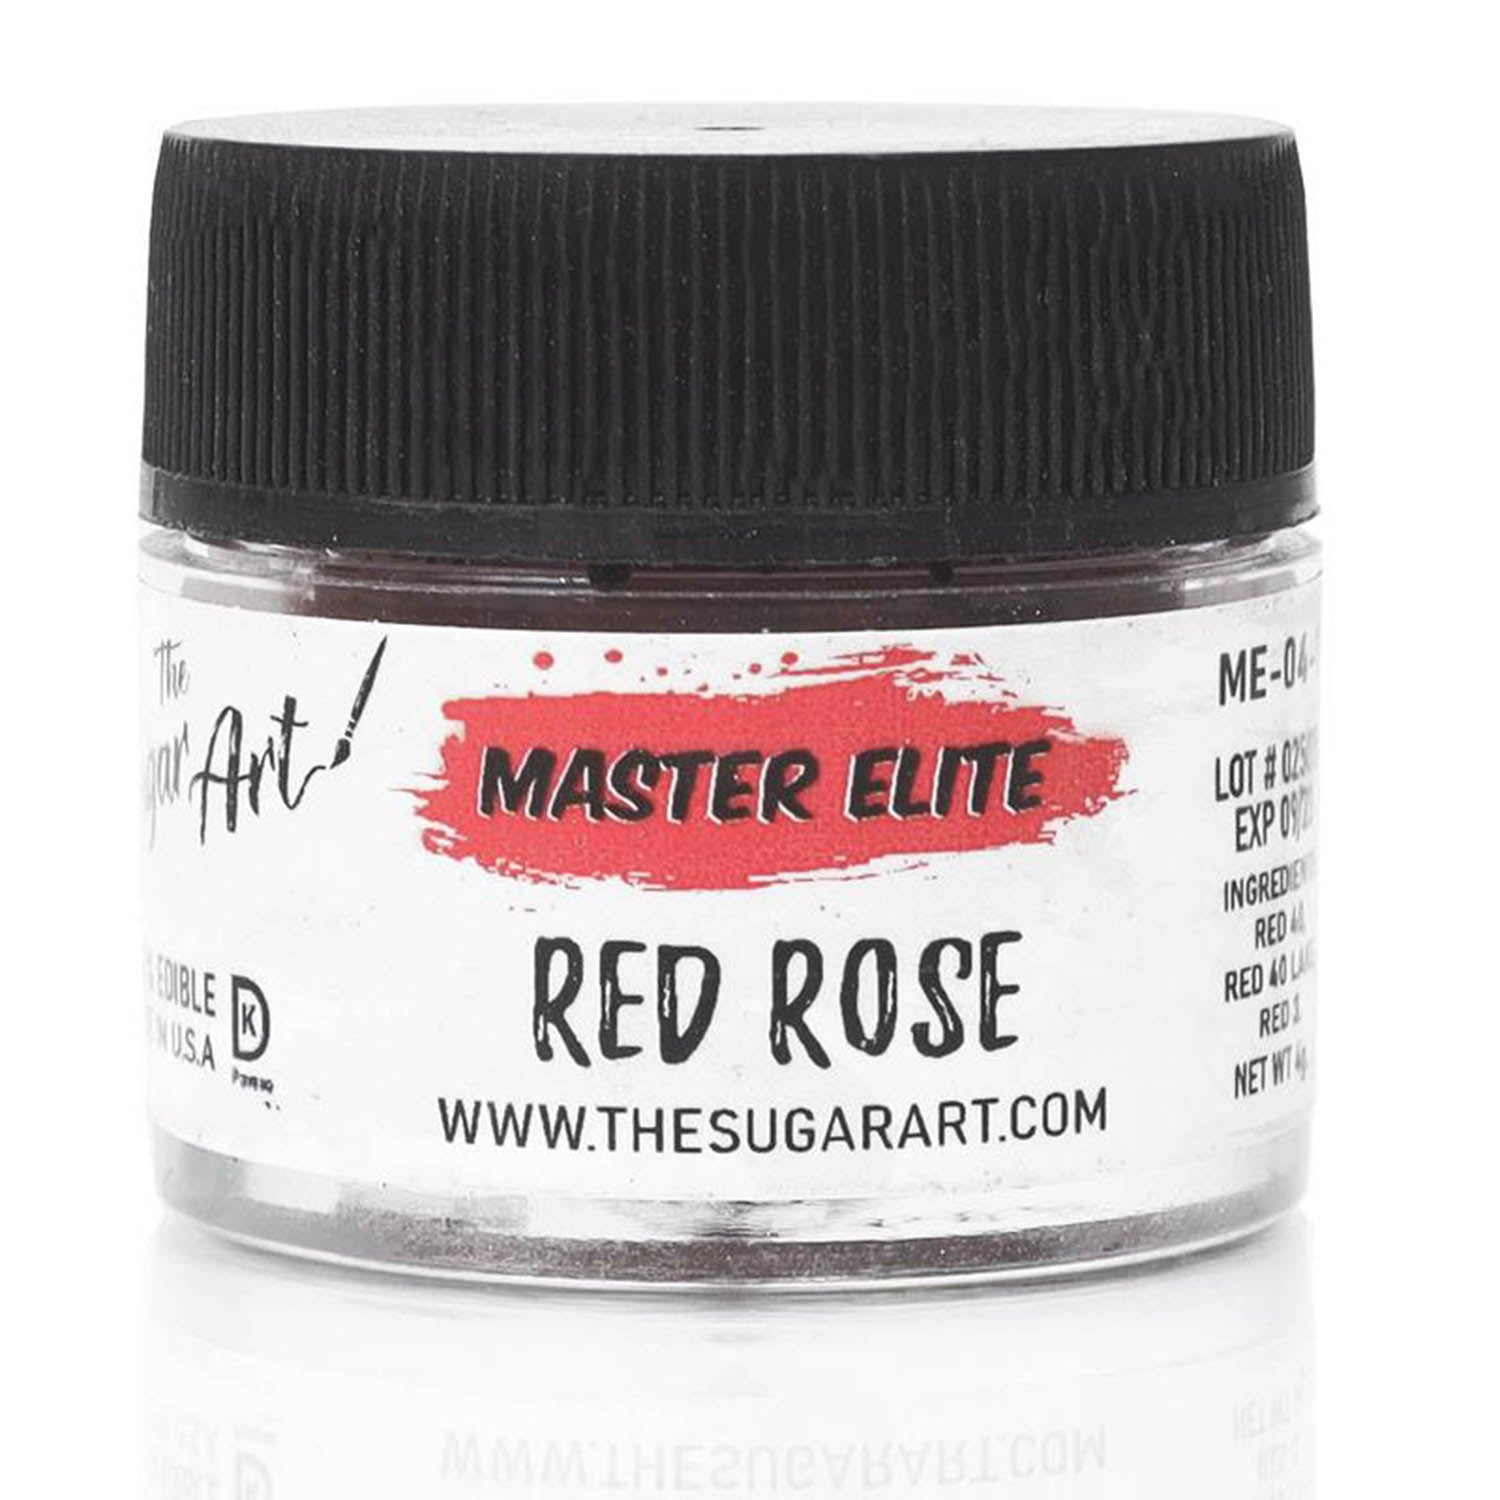 RED ROSE Master Elite